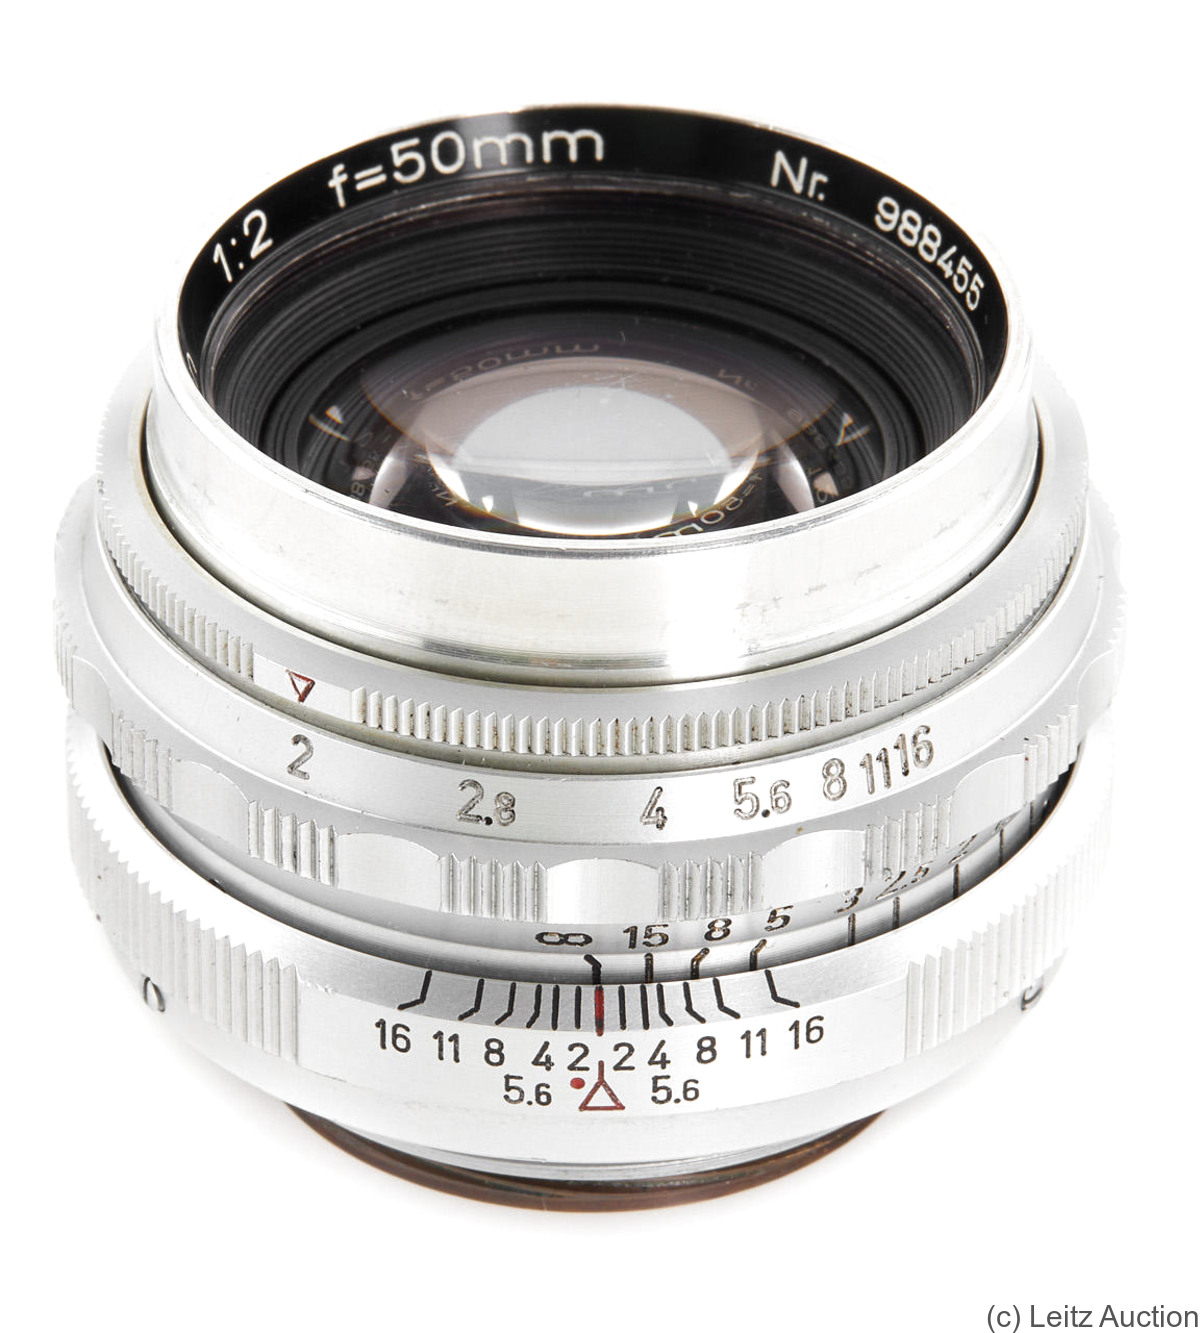 Steinheil: 50mm (5cm) f2 Quinon (M39) camera